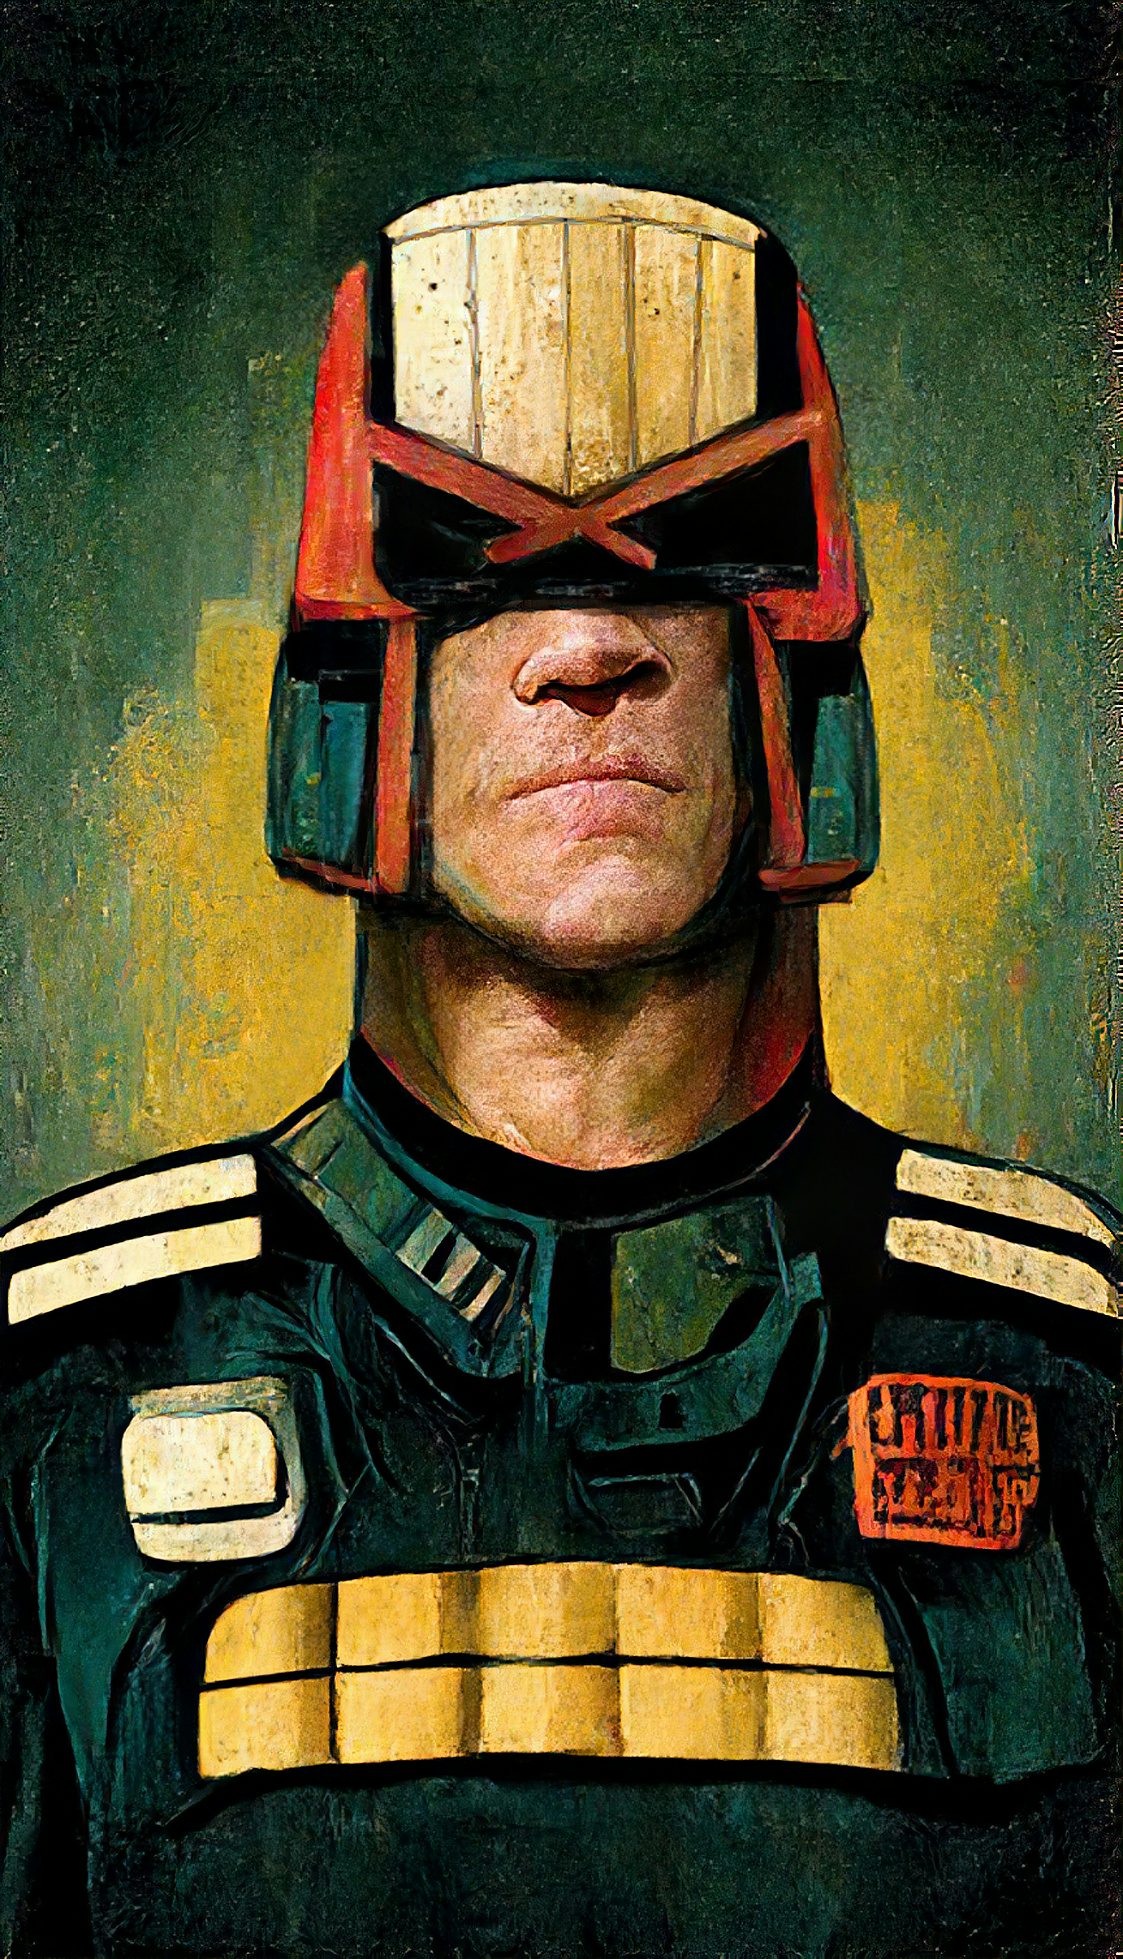 John Cena as Judge Dredd